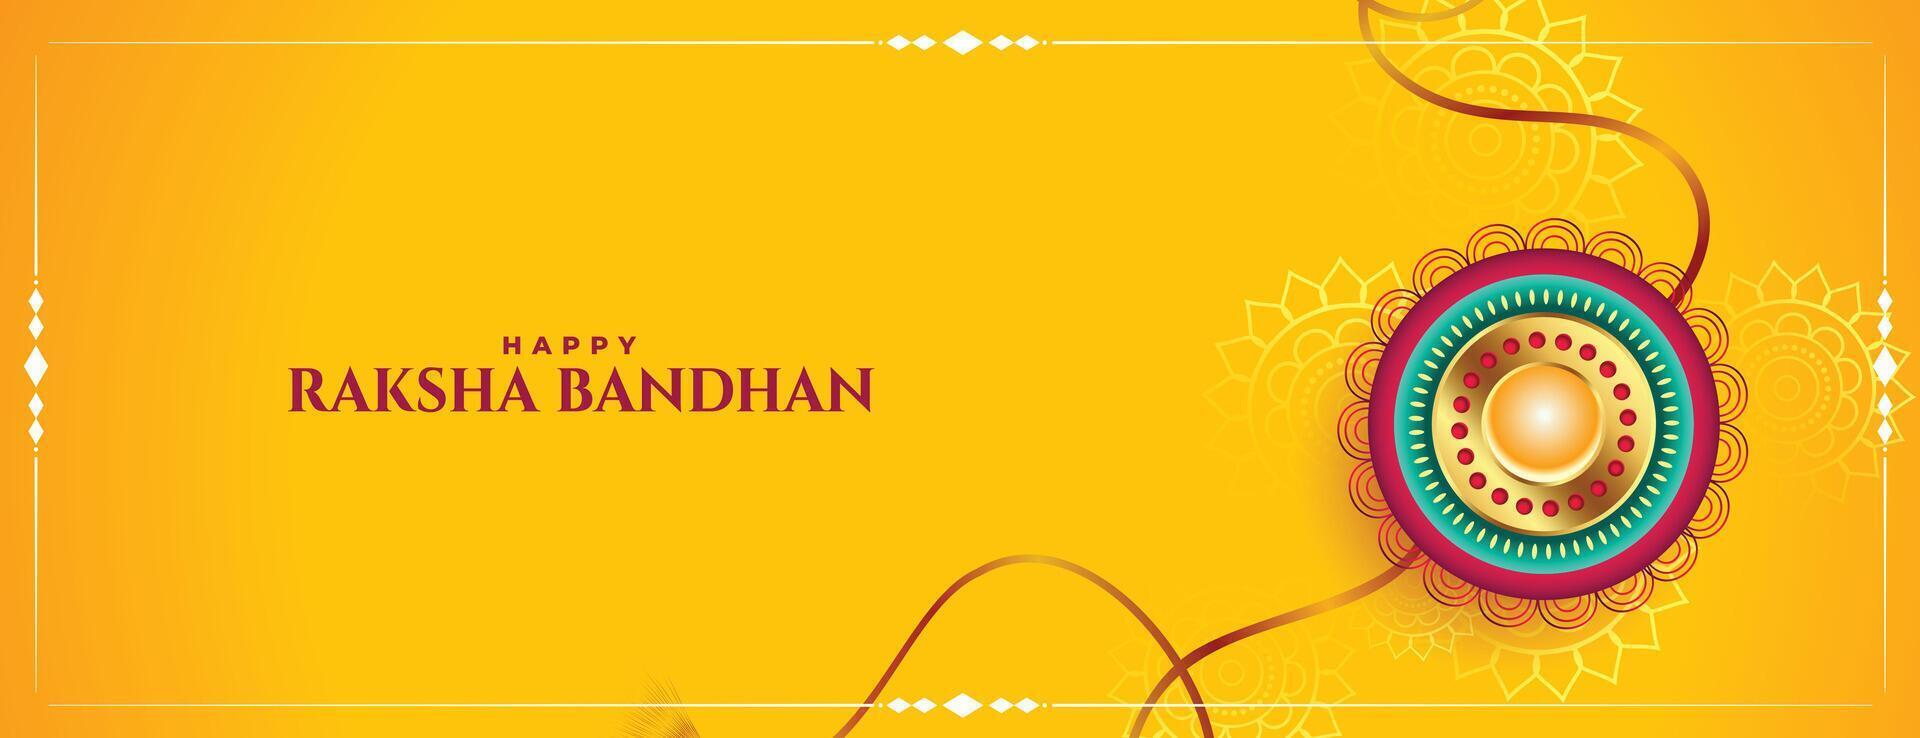 raksha Bandhan festival amarillo bandera tradicional diseño vector